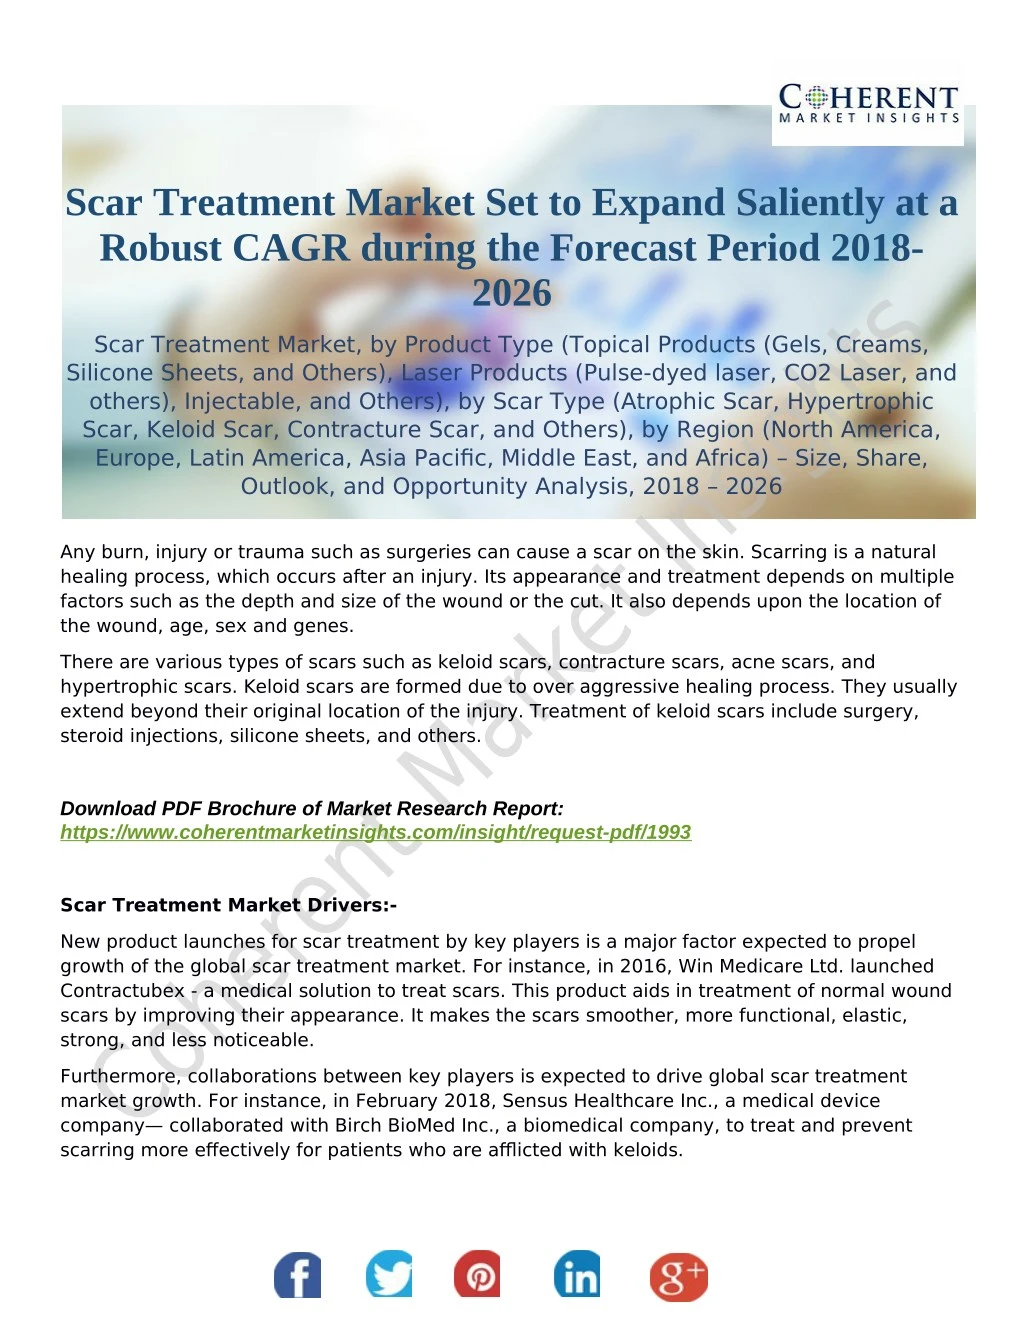 scar treatment market set to expand saliently